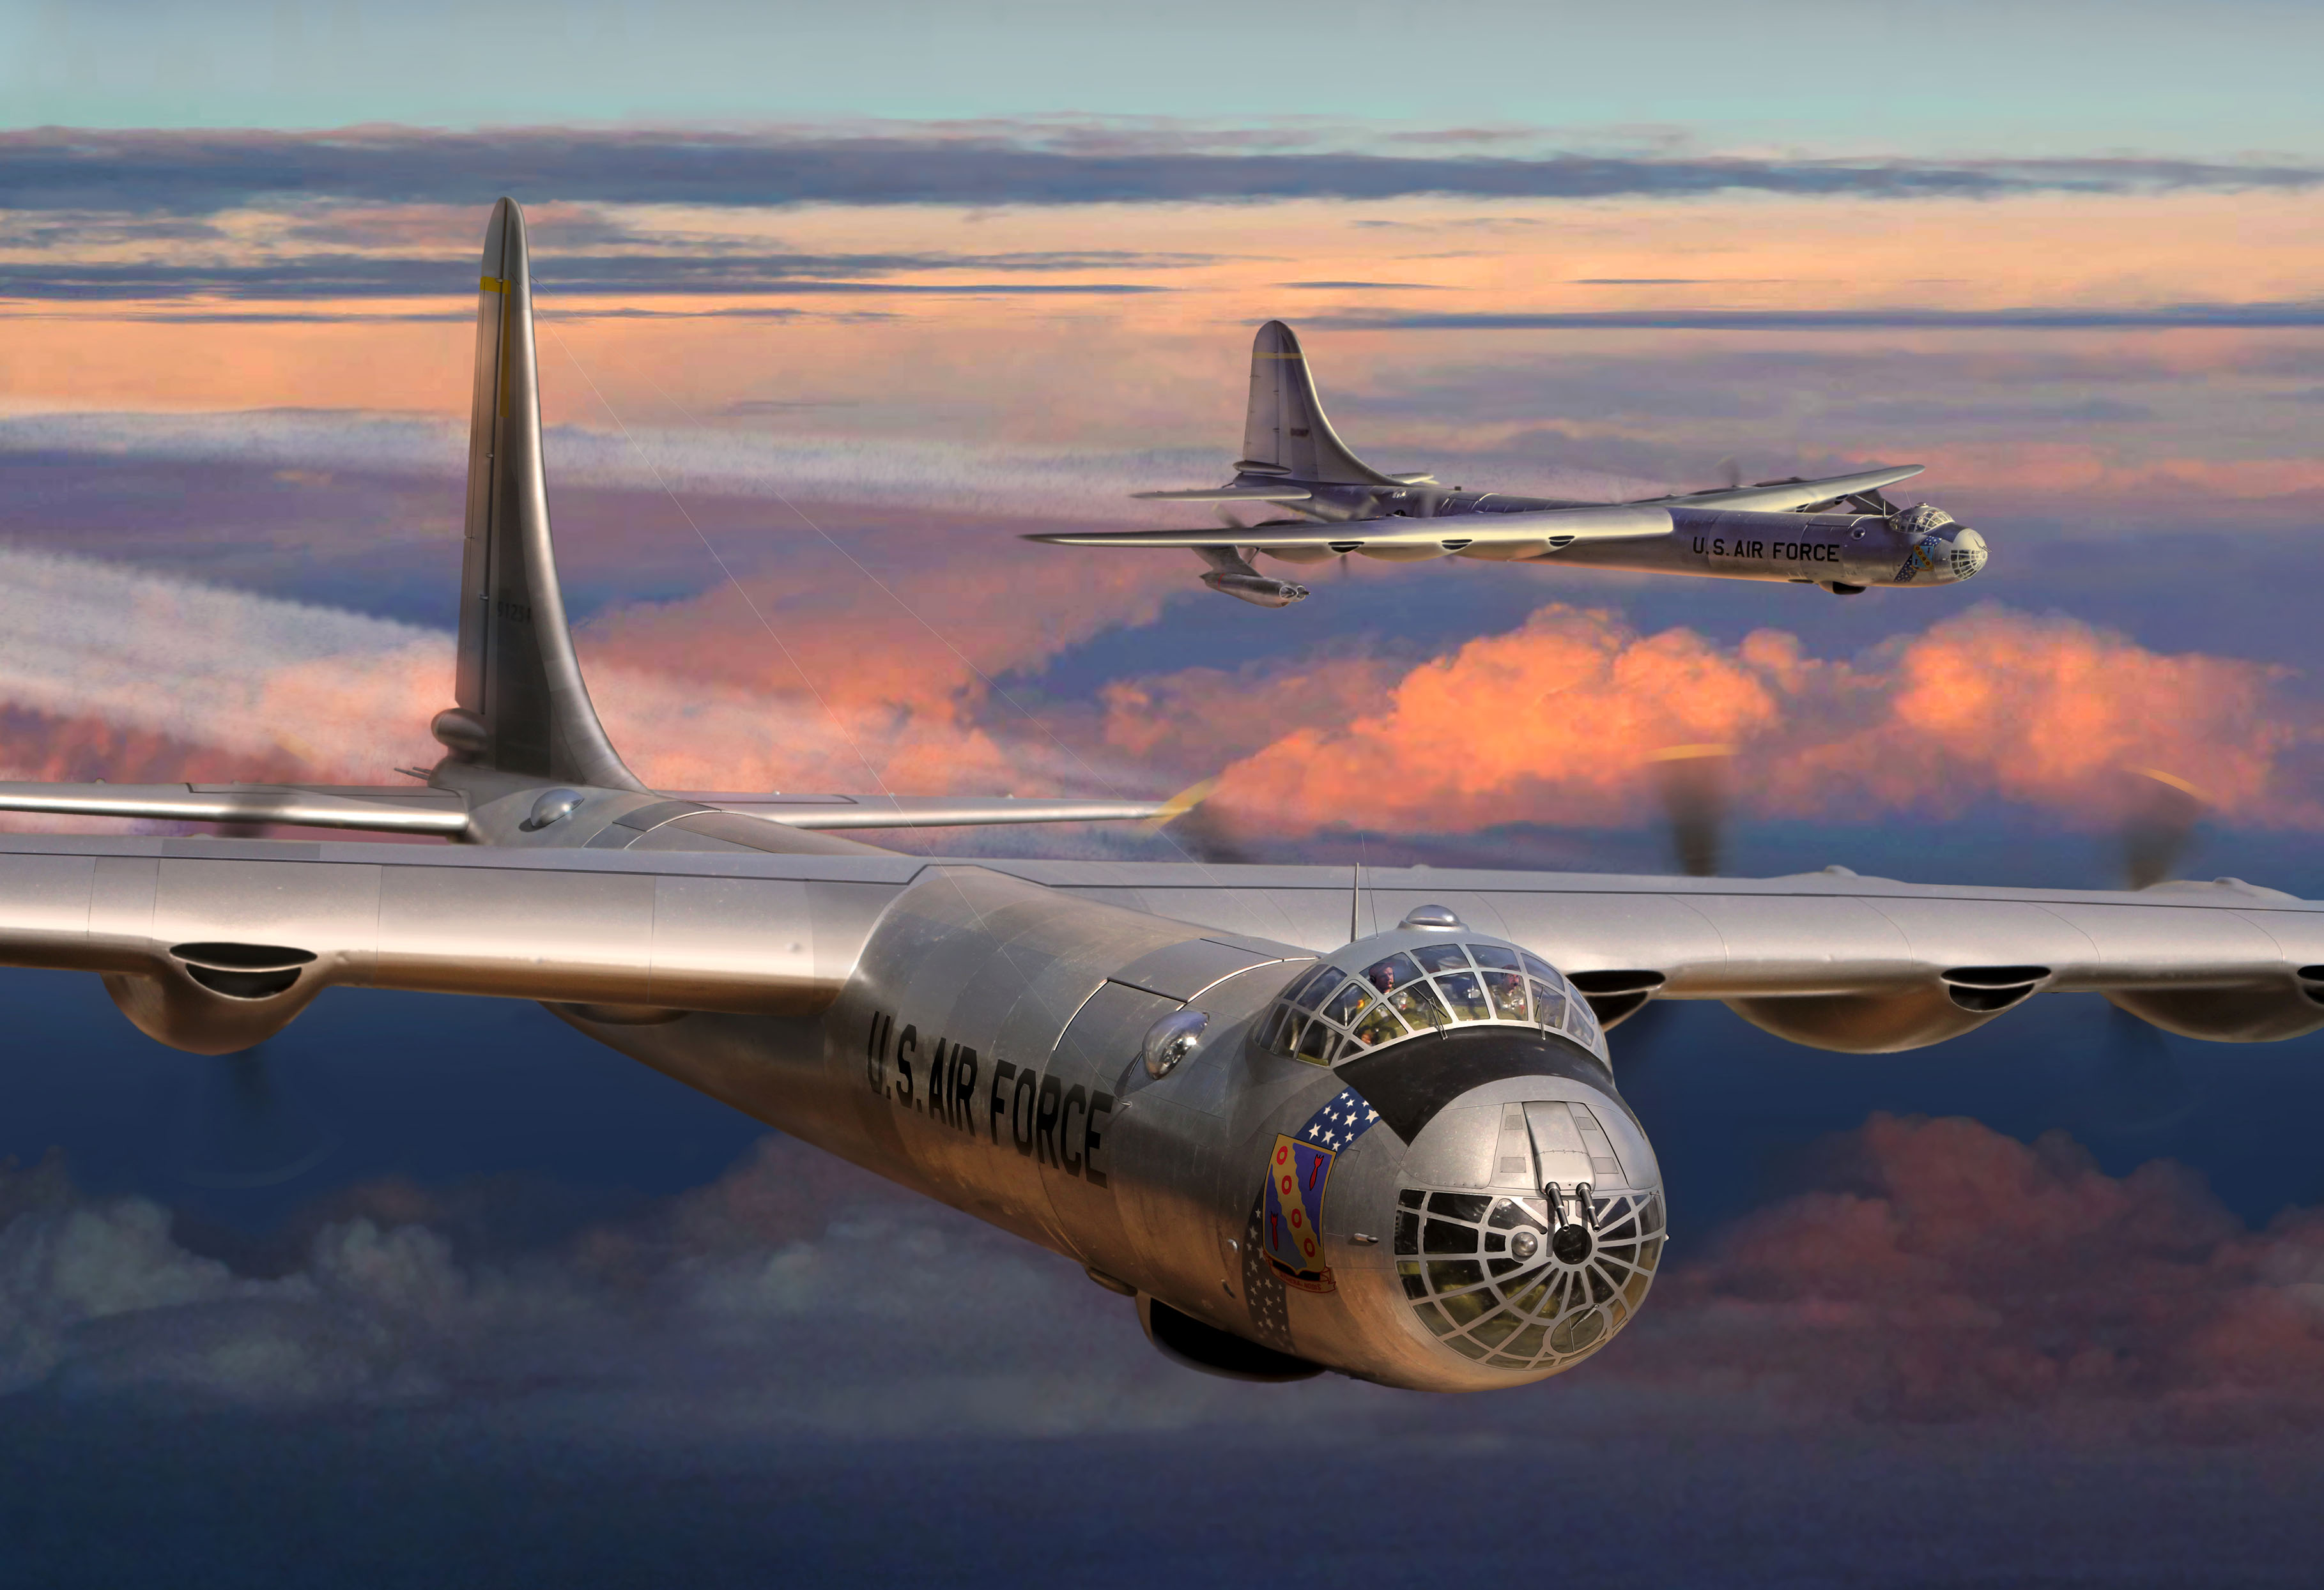 CONVAIR B-36 Peacemaker Long-Range Strategic Heavy Bomber Aircraft